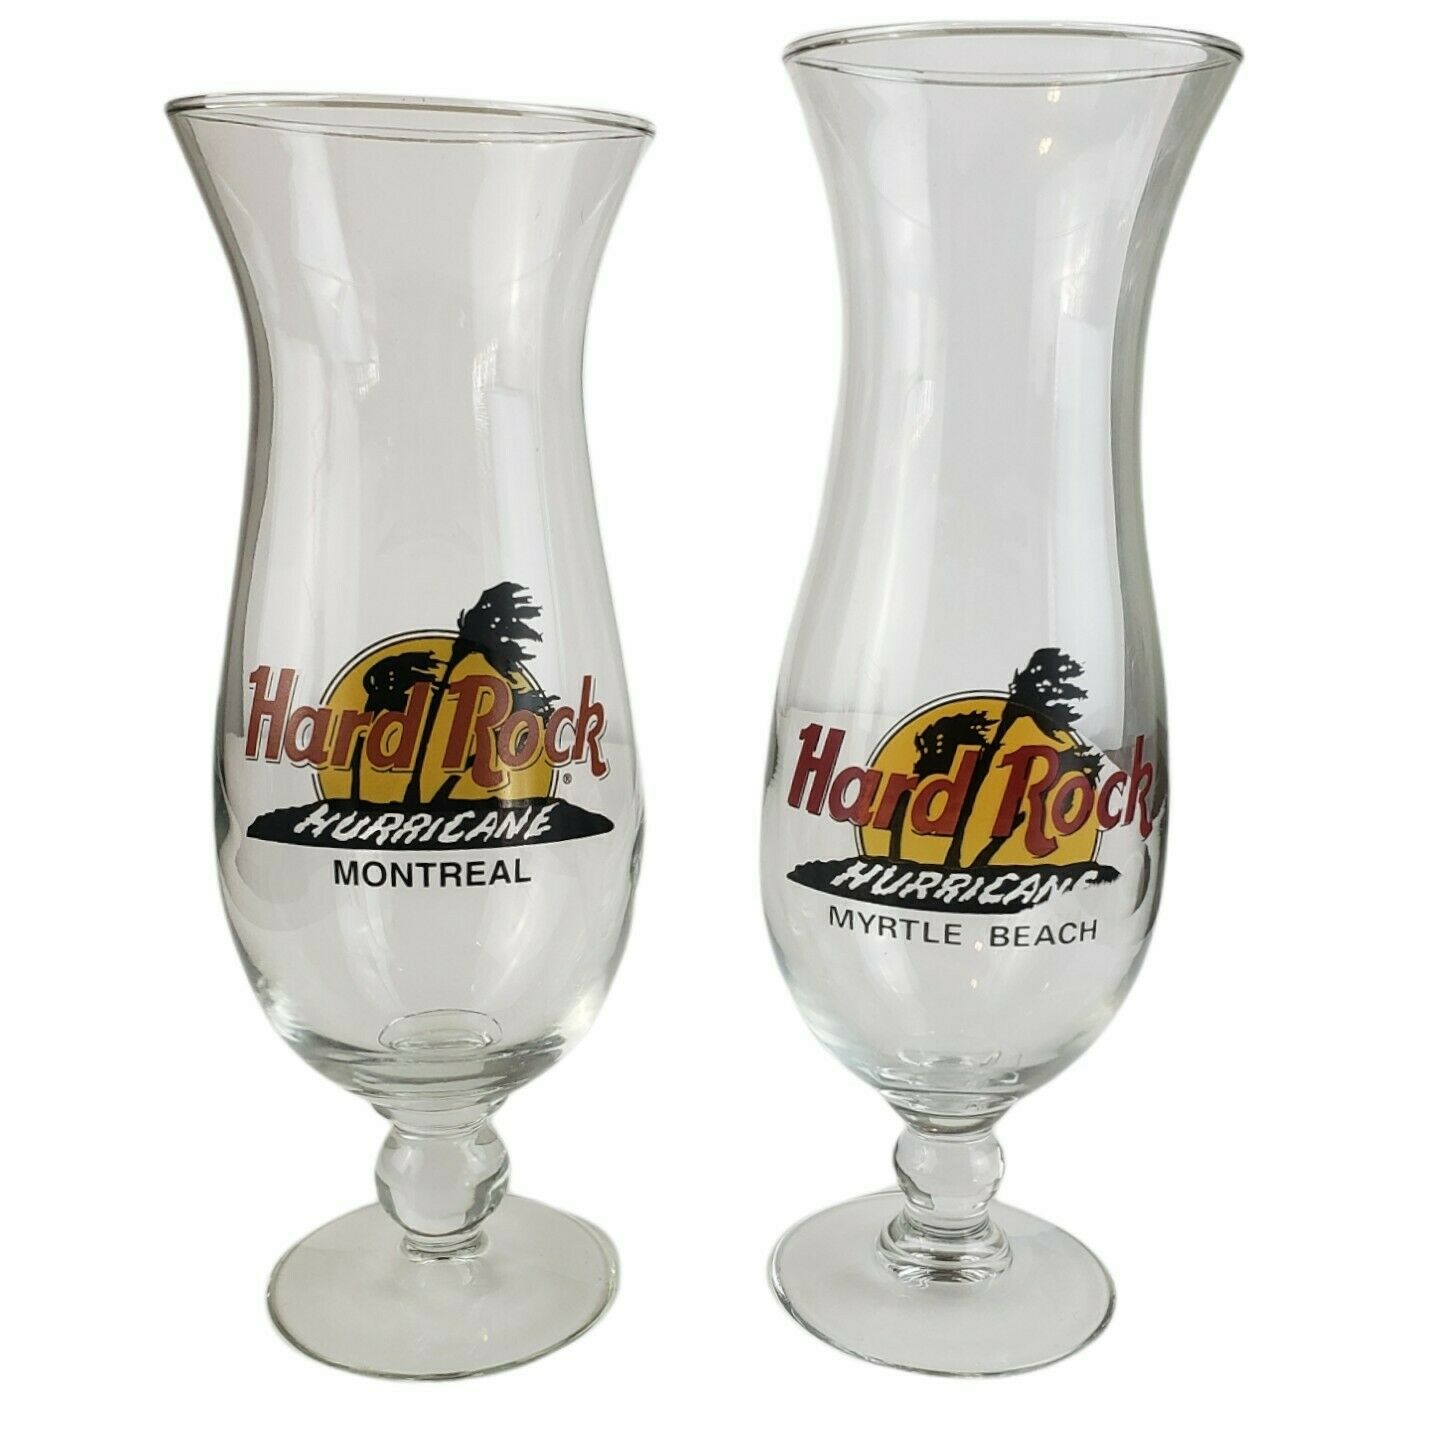 1 Hard Rock Cafe Montreal Hurricane & 2 Hard Rock Myrtle Beach Cocktail Glasses